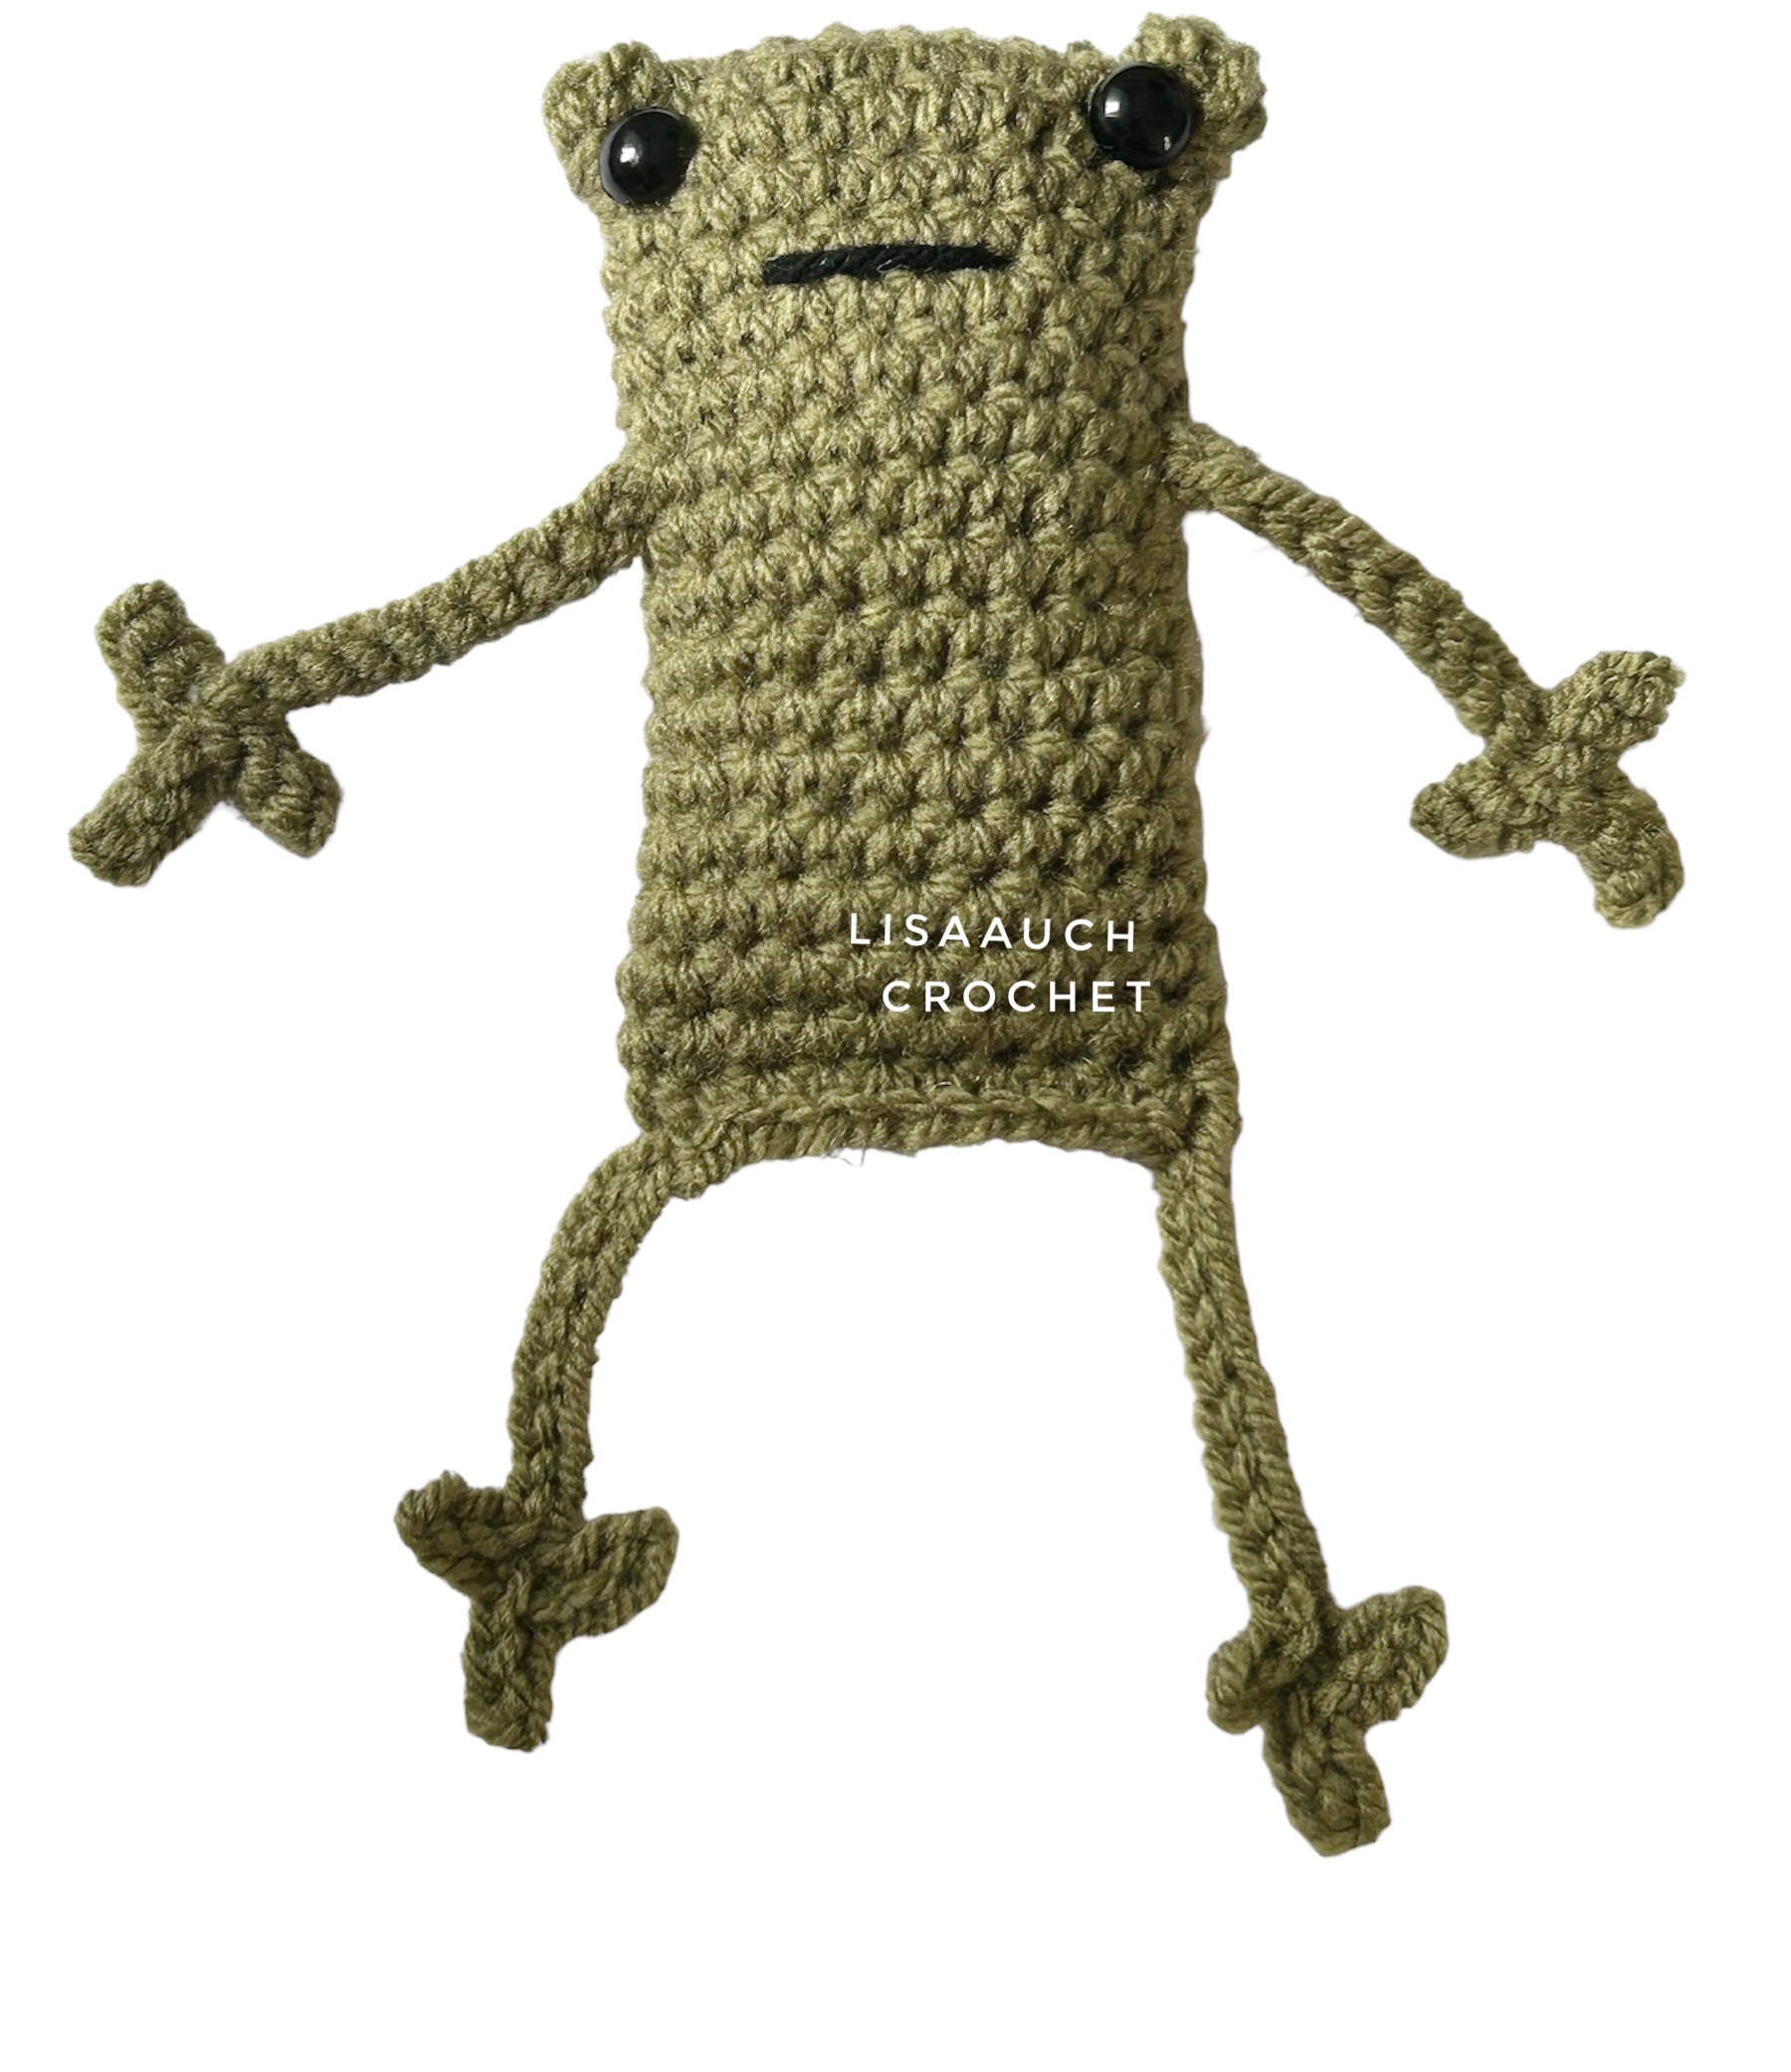 Crochet Frog and Chick Keychain, Crochet Keychain, Crochet Frog Keychain,  Crochet Chick Keychain, Amigurumi Frog Keychain, Keychain 